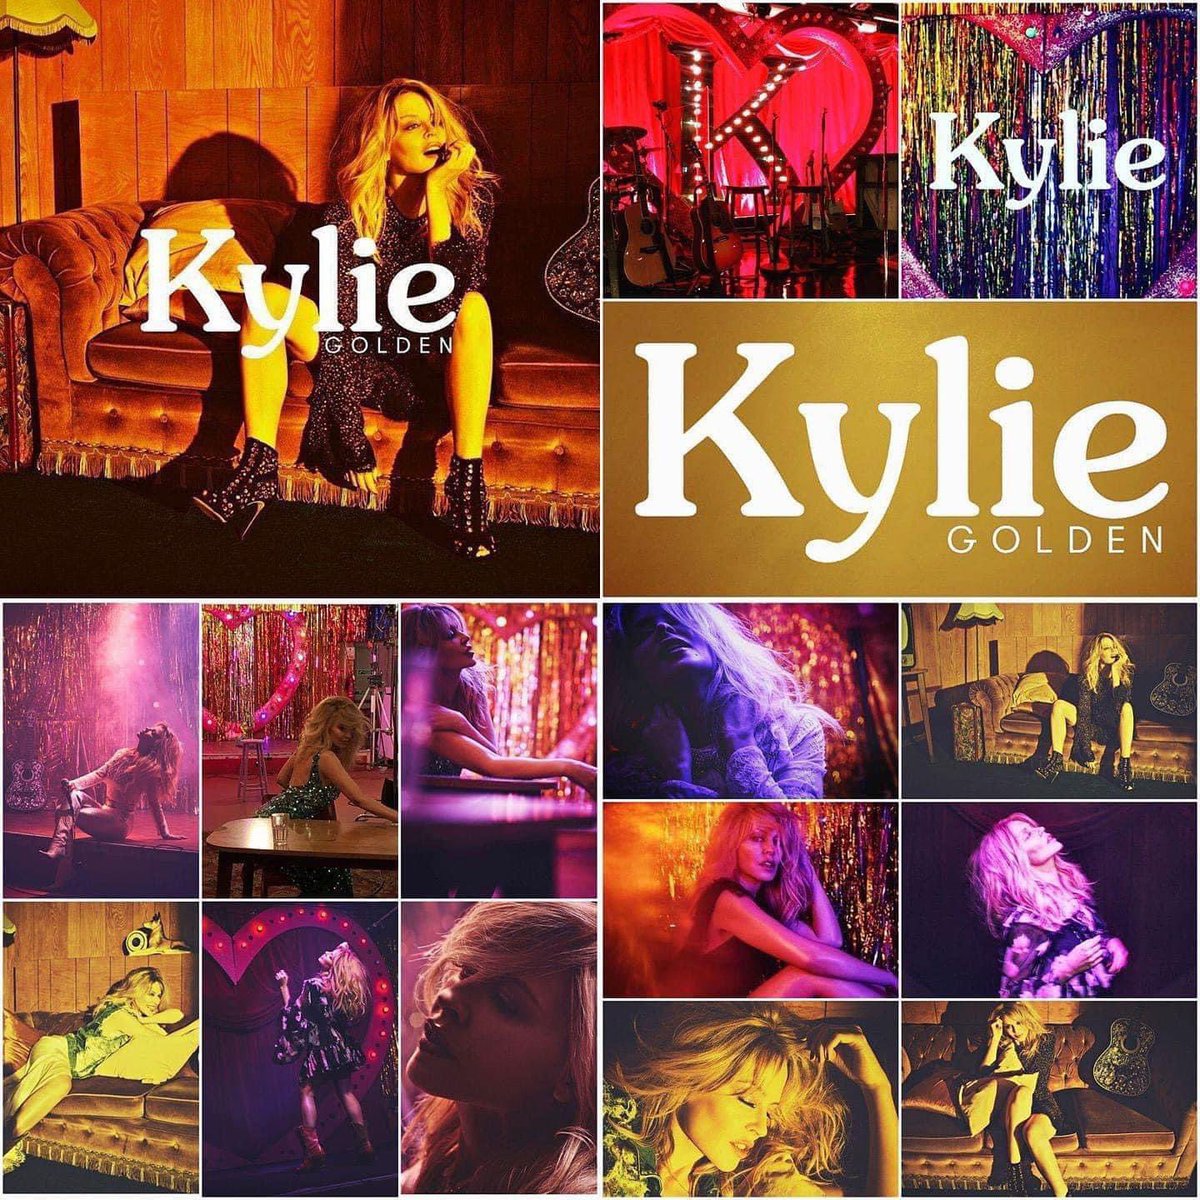 Happy 6th birthday anniversary to Kylie’s amazing 14th studio album golden . What an brilliant album and a great tour as well @ilovekylie_1986 @JonasSa72985224 @MrsCobb1979 @CarenLalania @SayK_Group @Apolonia1a @Diana51567582 @charley_pop @RLeBonTennant